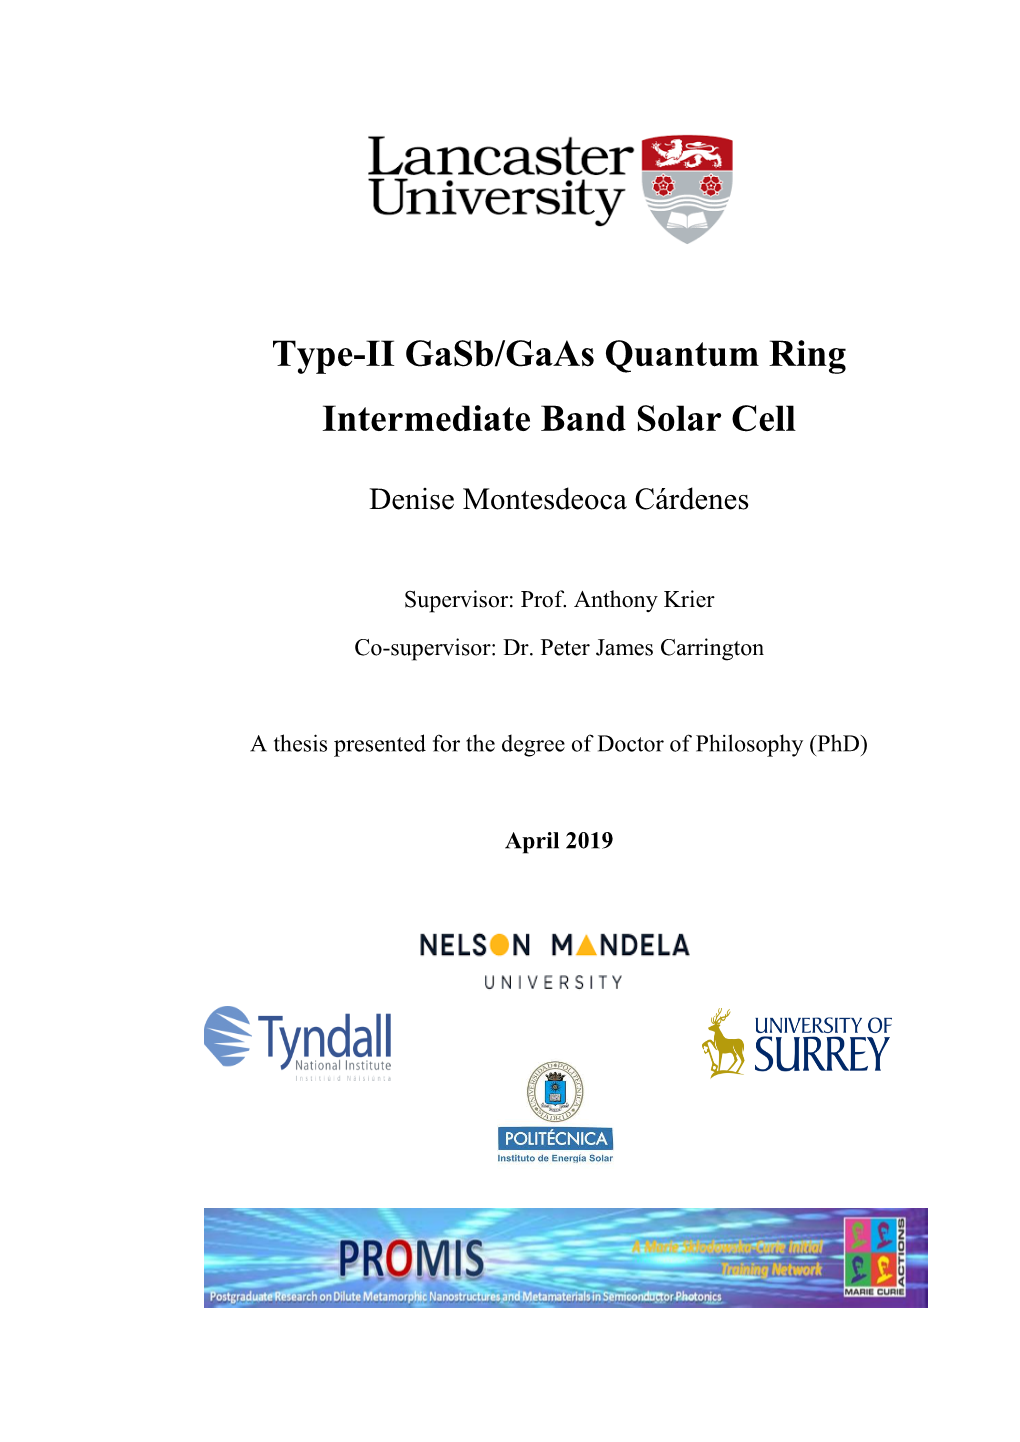 Type-II Gasb/Gaas Quantum Ring Intermediate Band Solar Cell